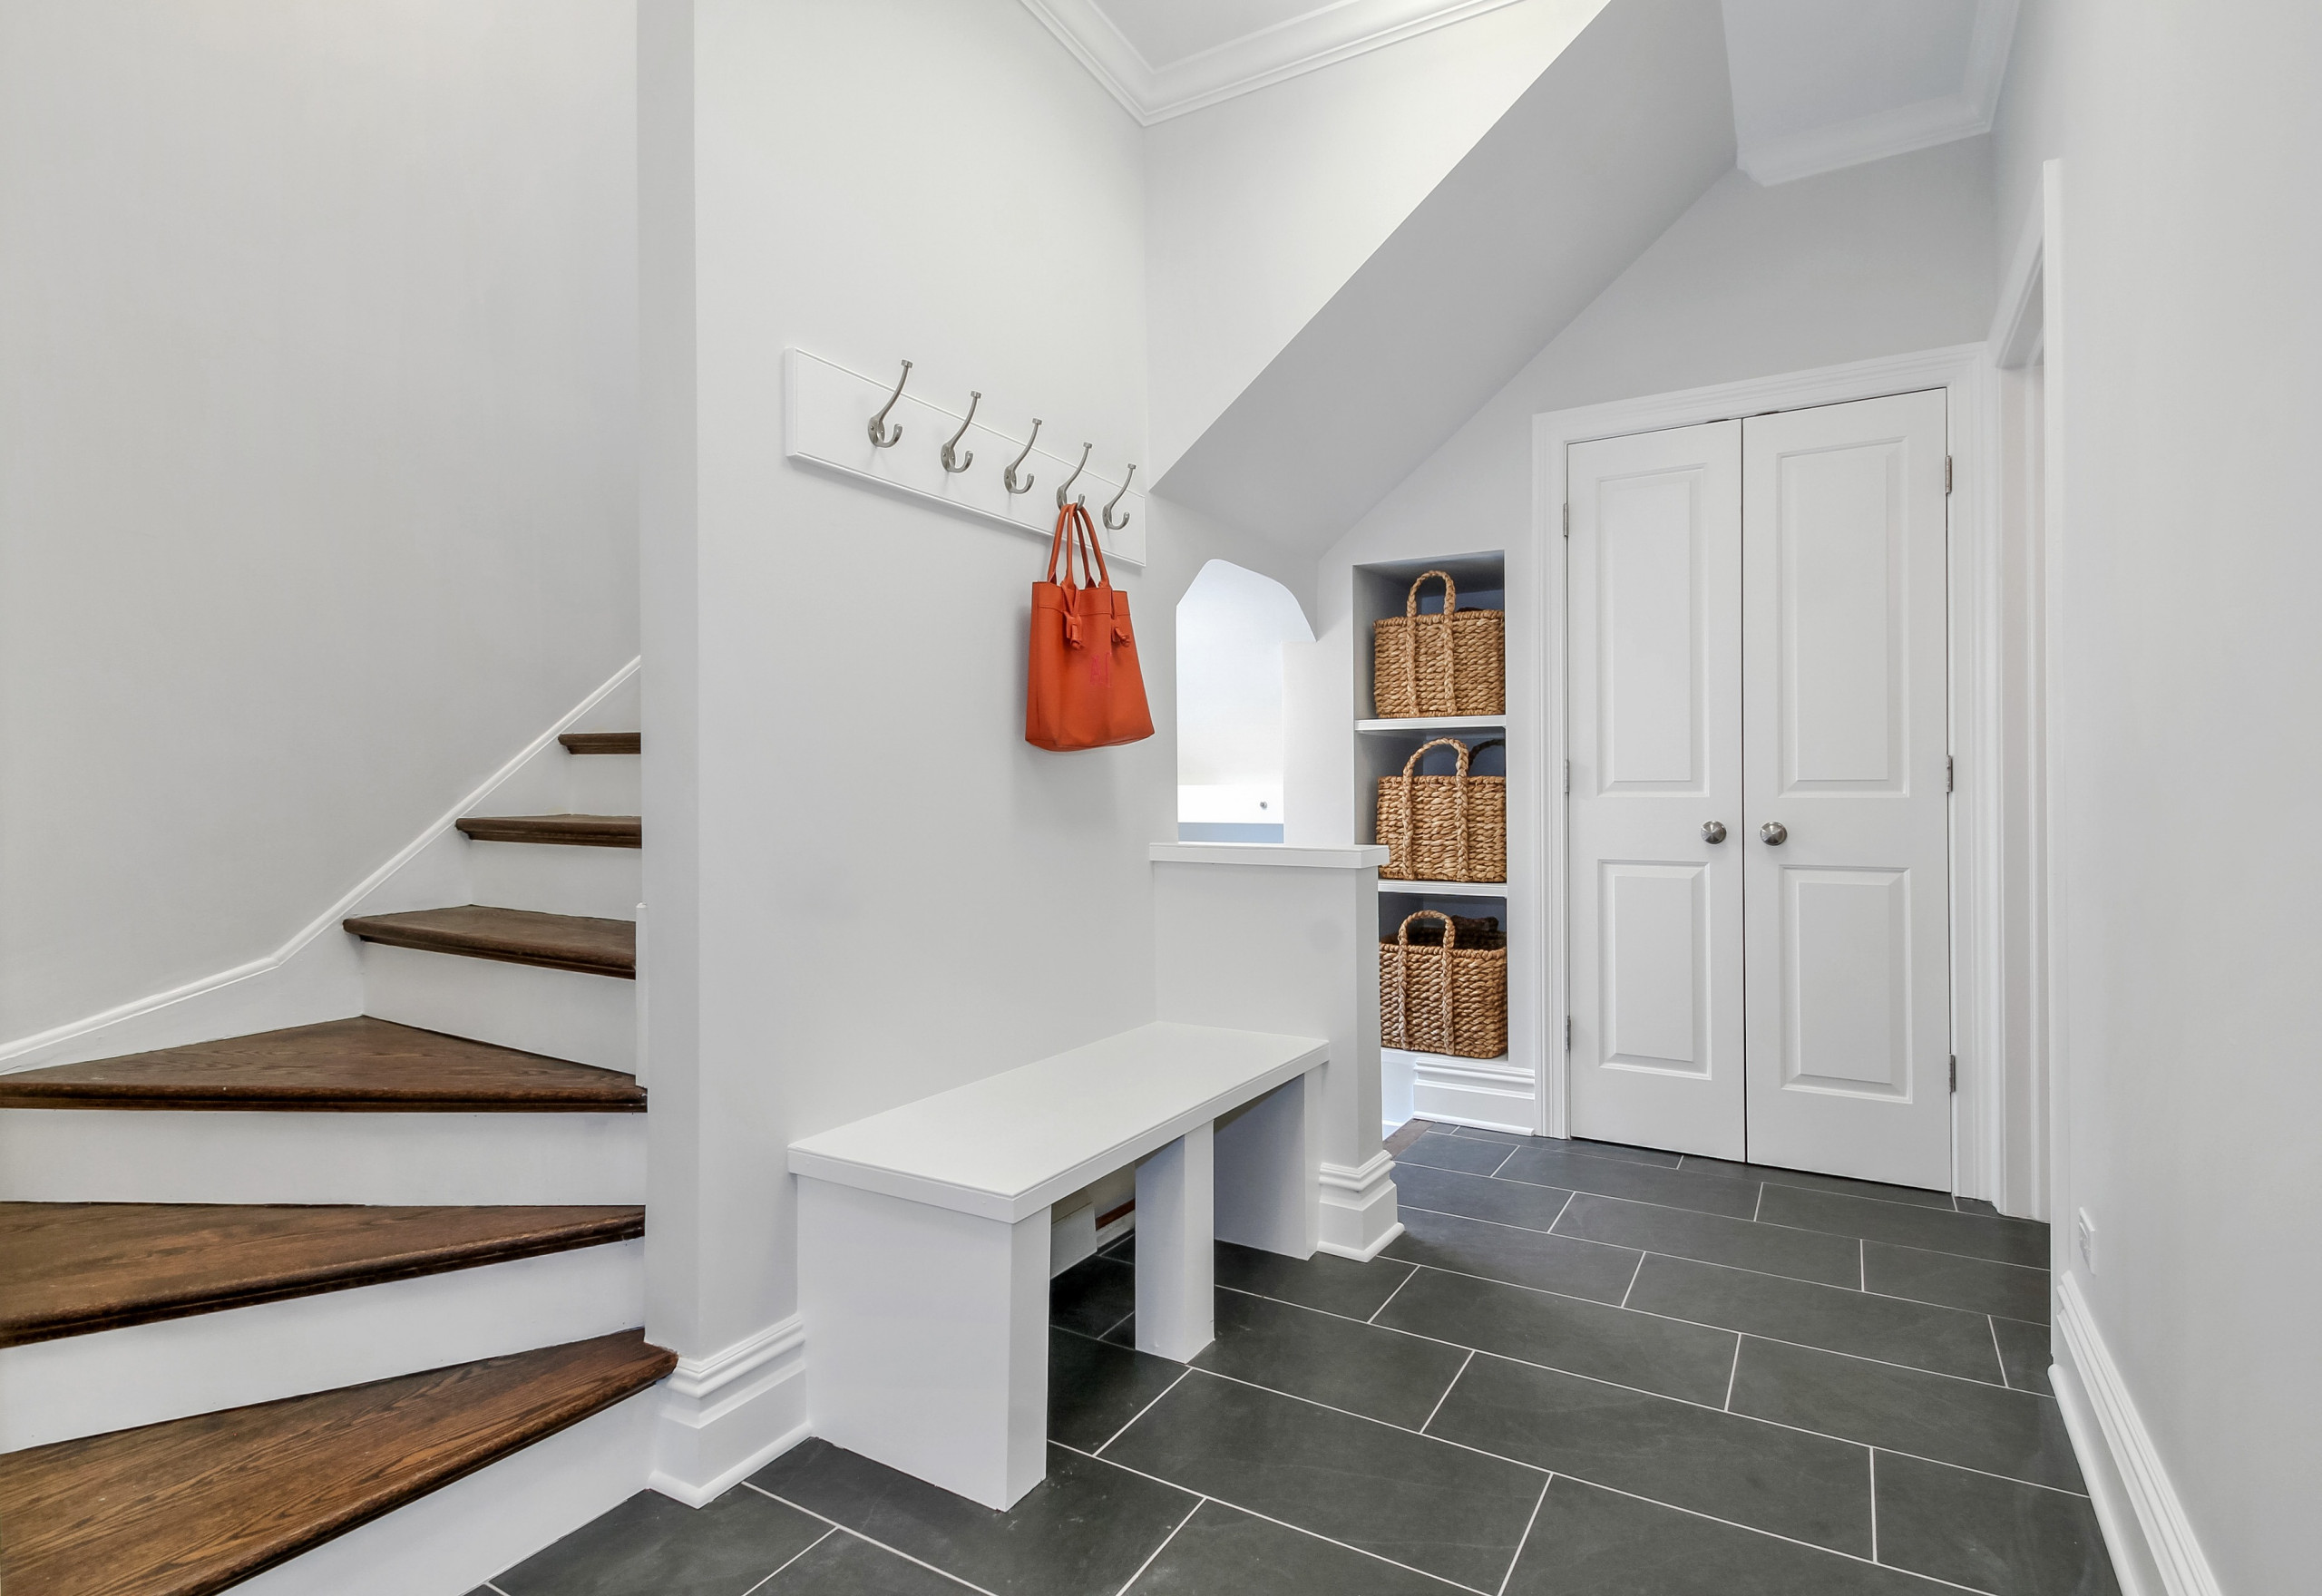 75 Ceramic Tile Entryway Ideas You Ll